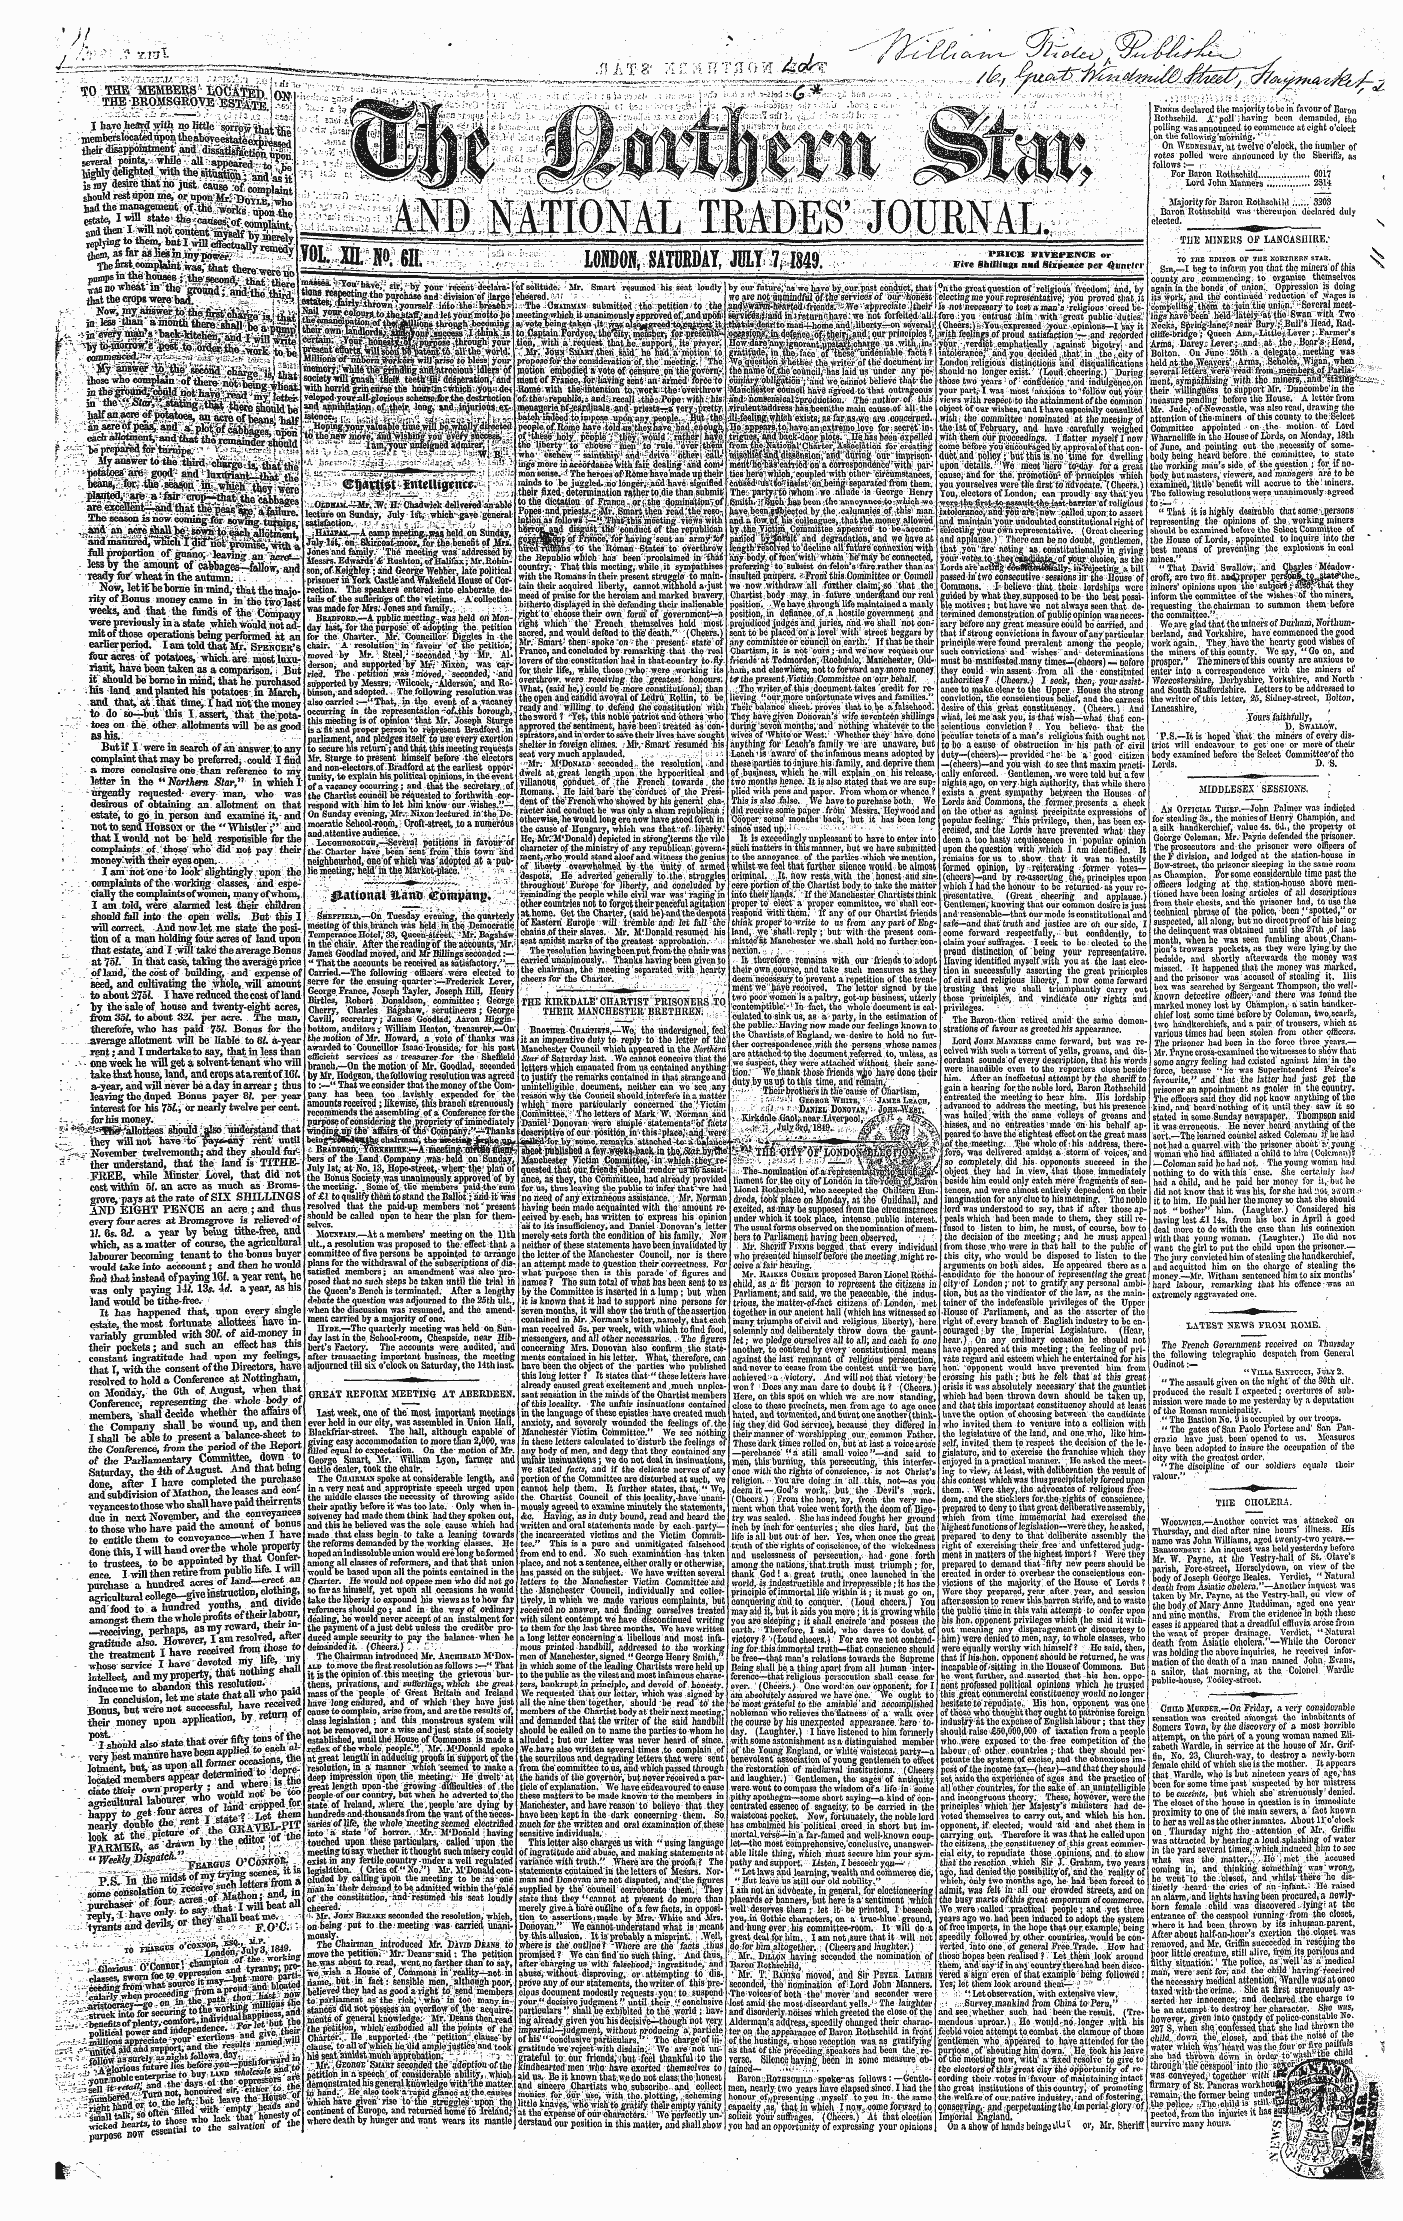 Northern Star (1837-1852): jS F Y, 3rd edition - R.Lopimil^Mrf'wi Hr! Chadwick Deli Vered...